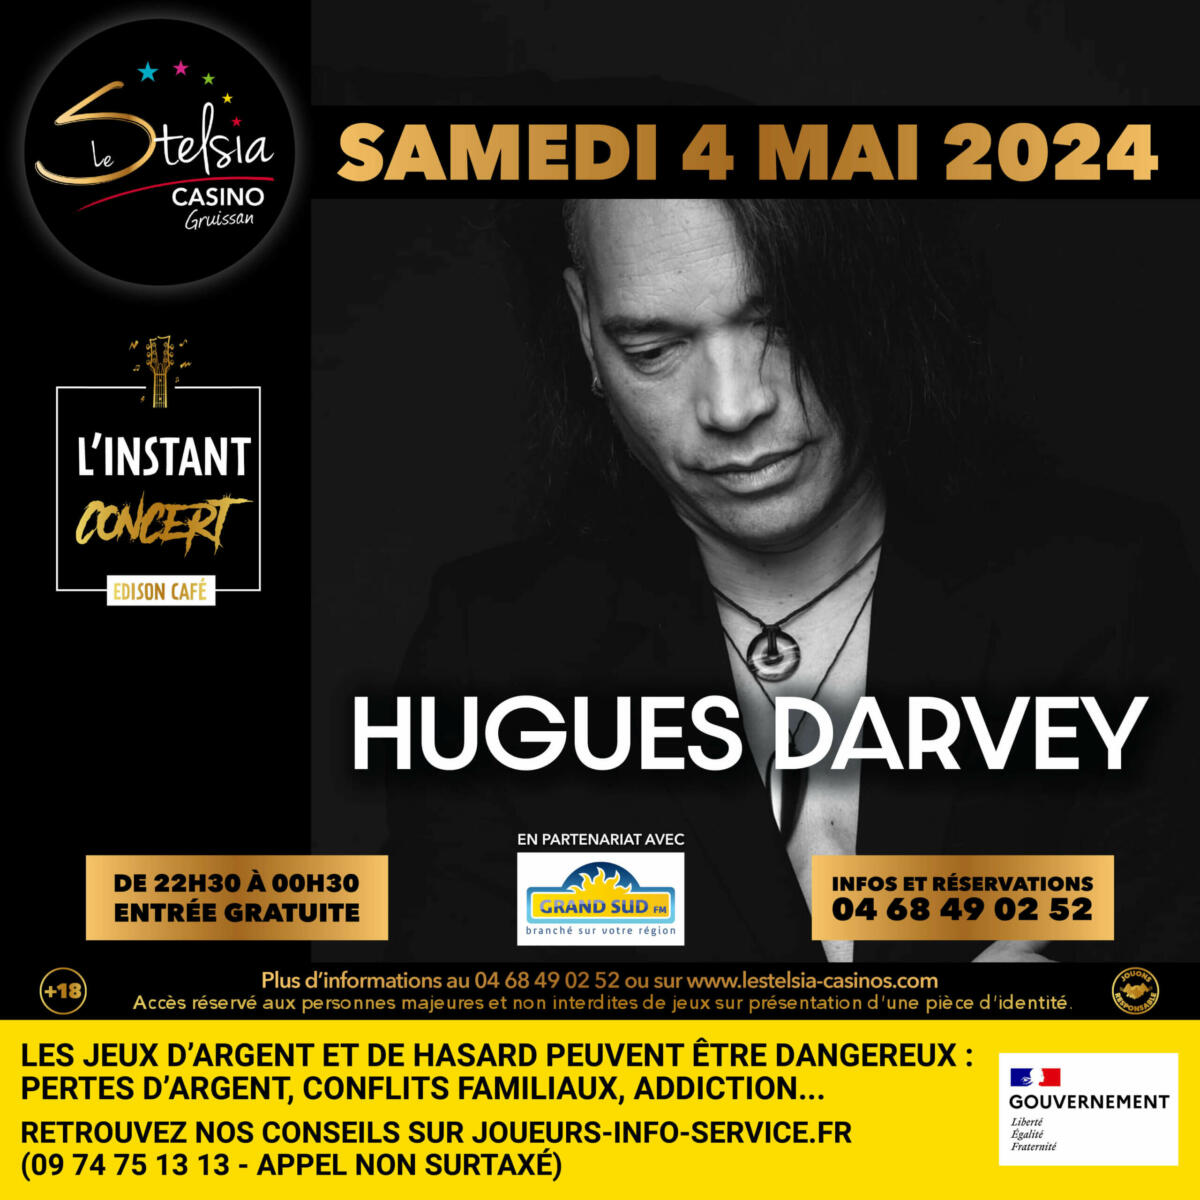 01-05-24 : Hugues DARVEY en concert le samedi 04 mai 2024 au Stelsia Casino de Gruissan